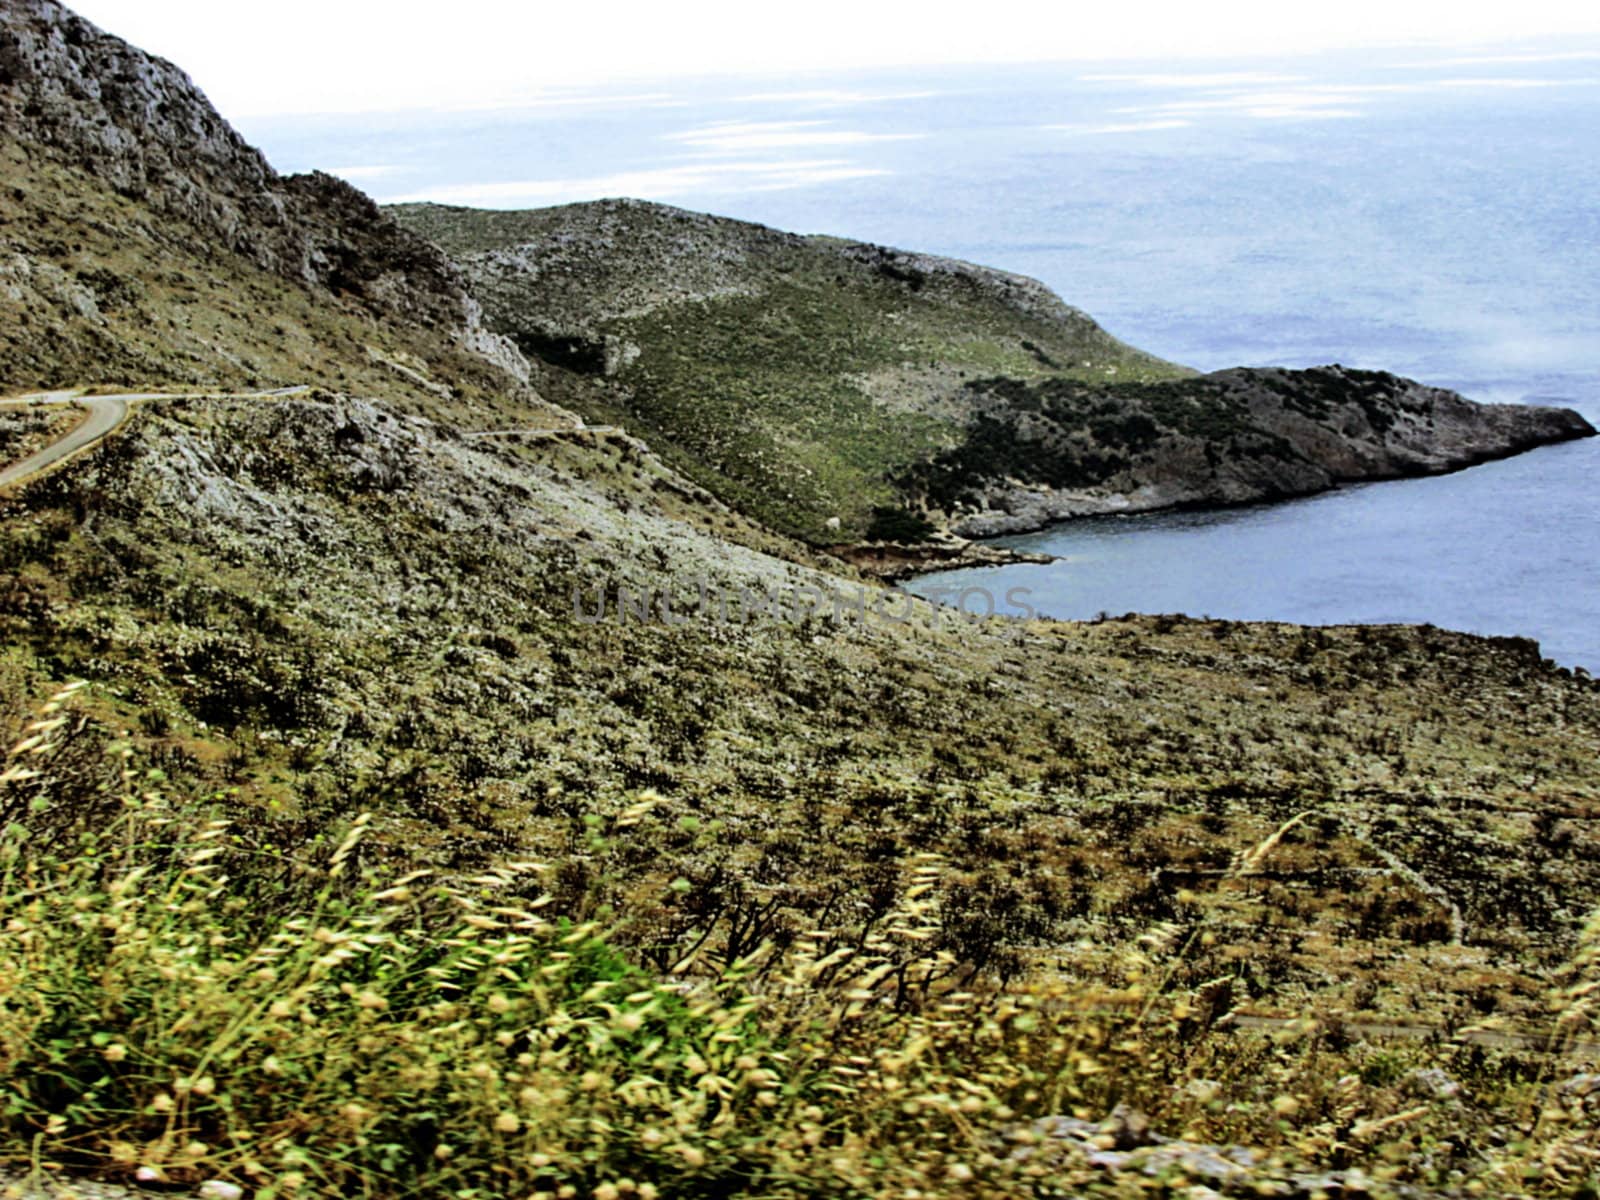 a burnt landscape on the coastline of the island of Kythera, Greece